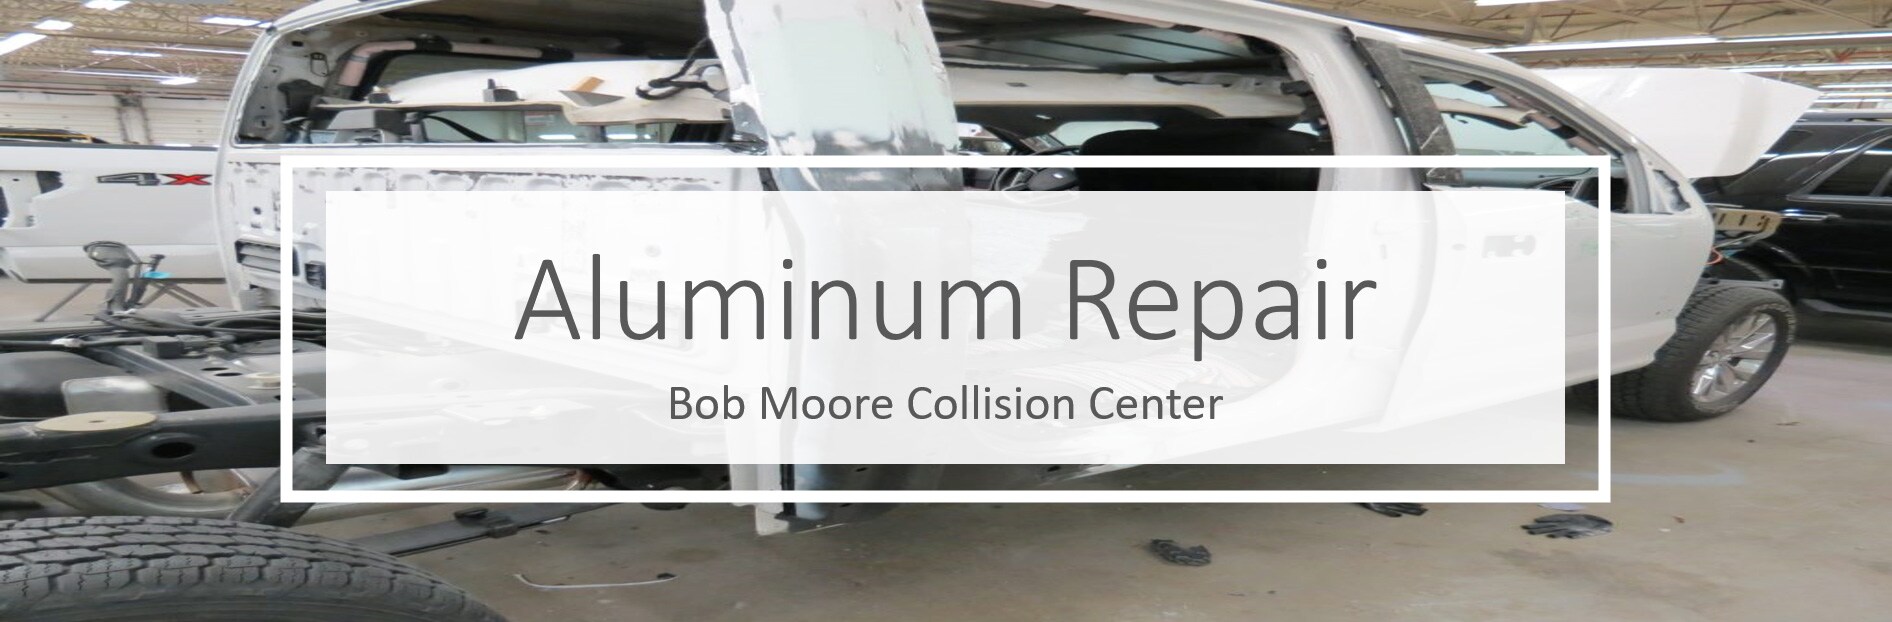 Aluminum Repair in Oklahoma City